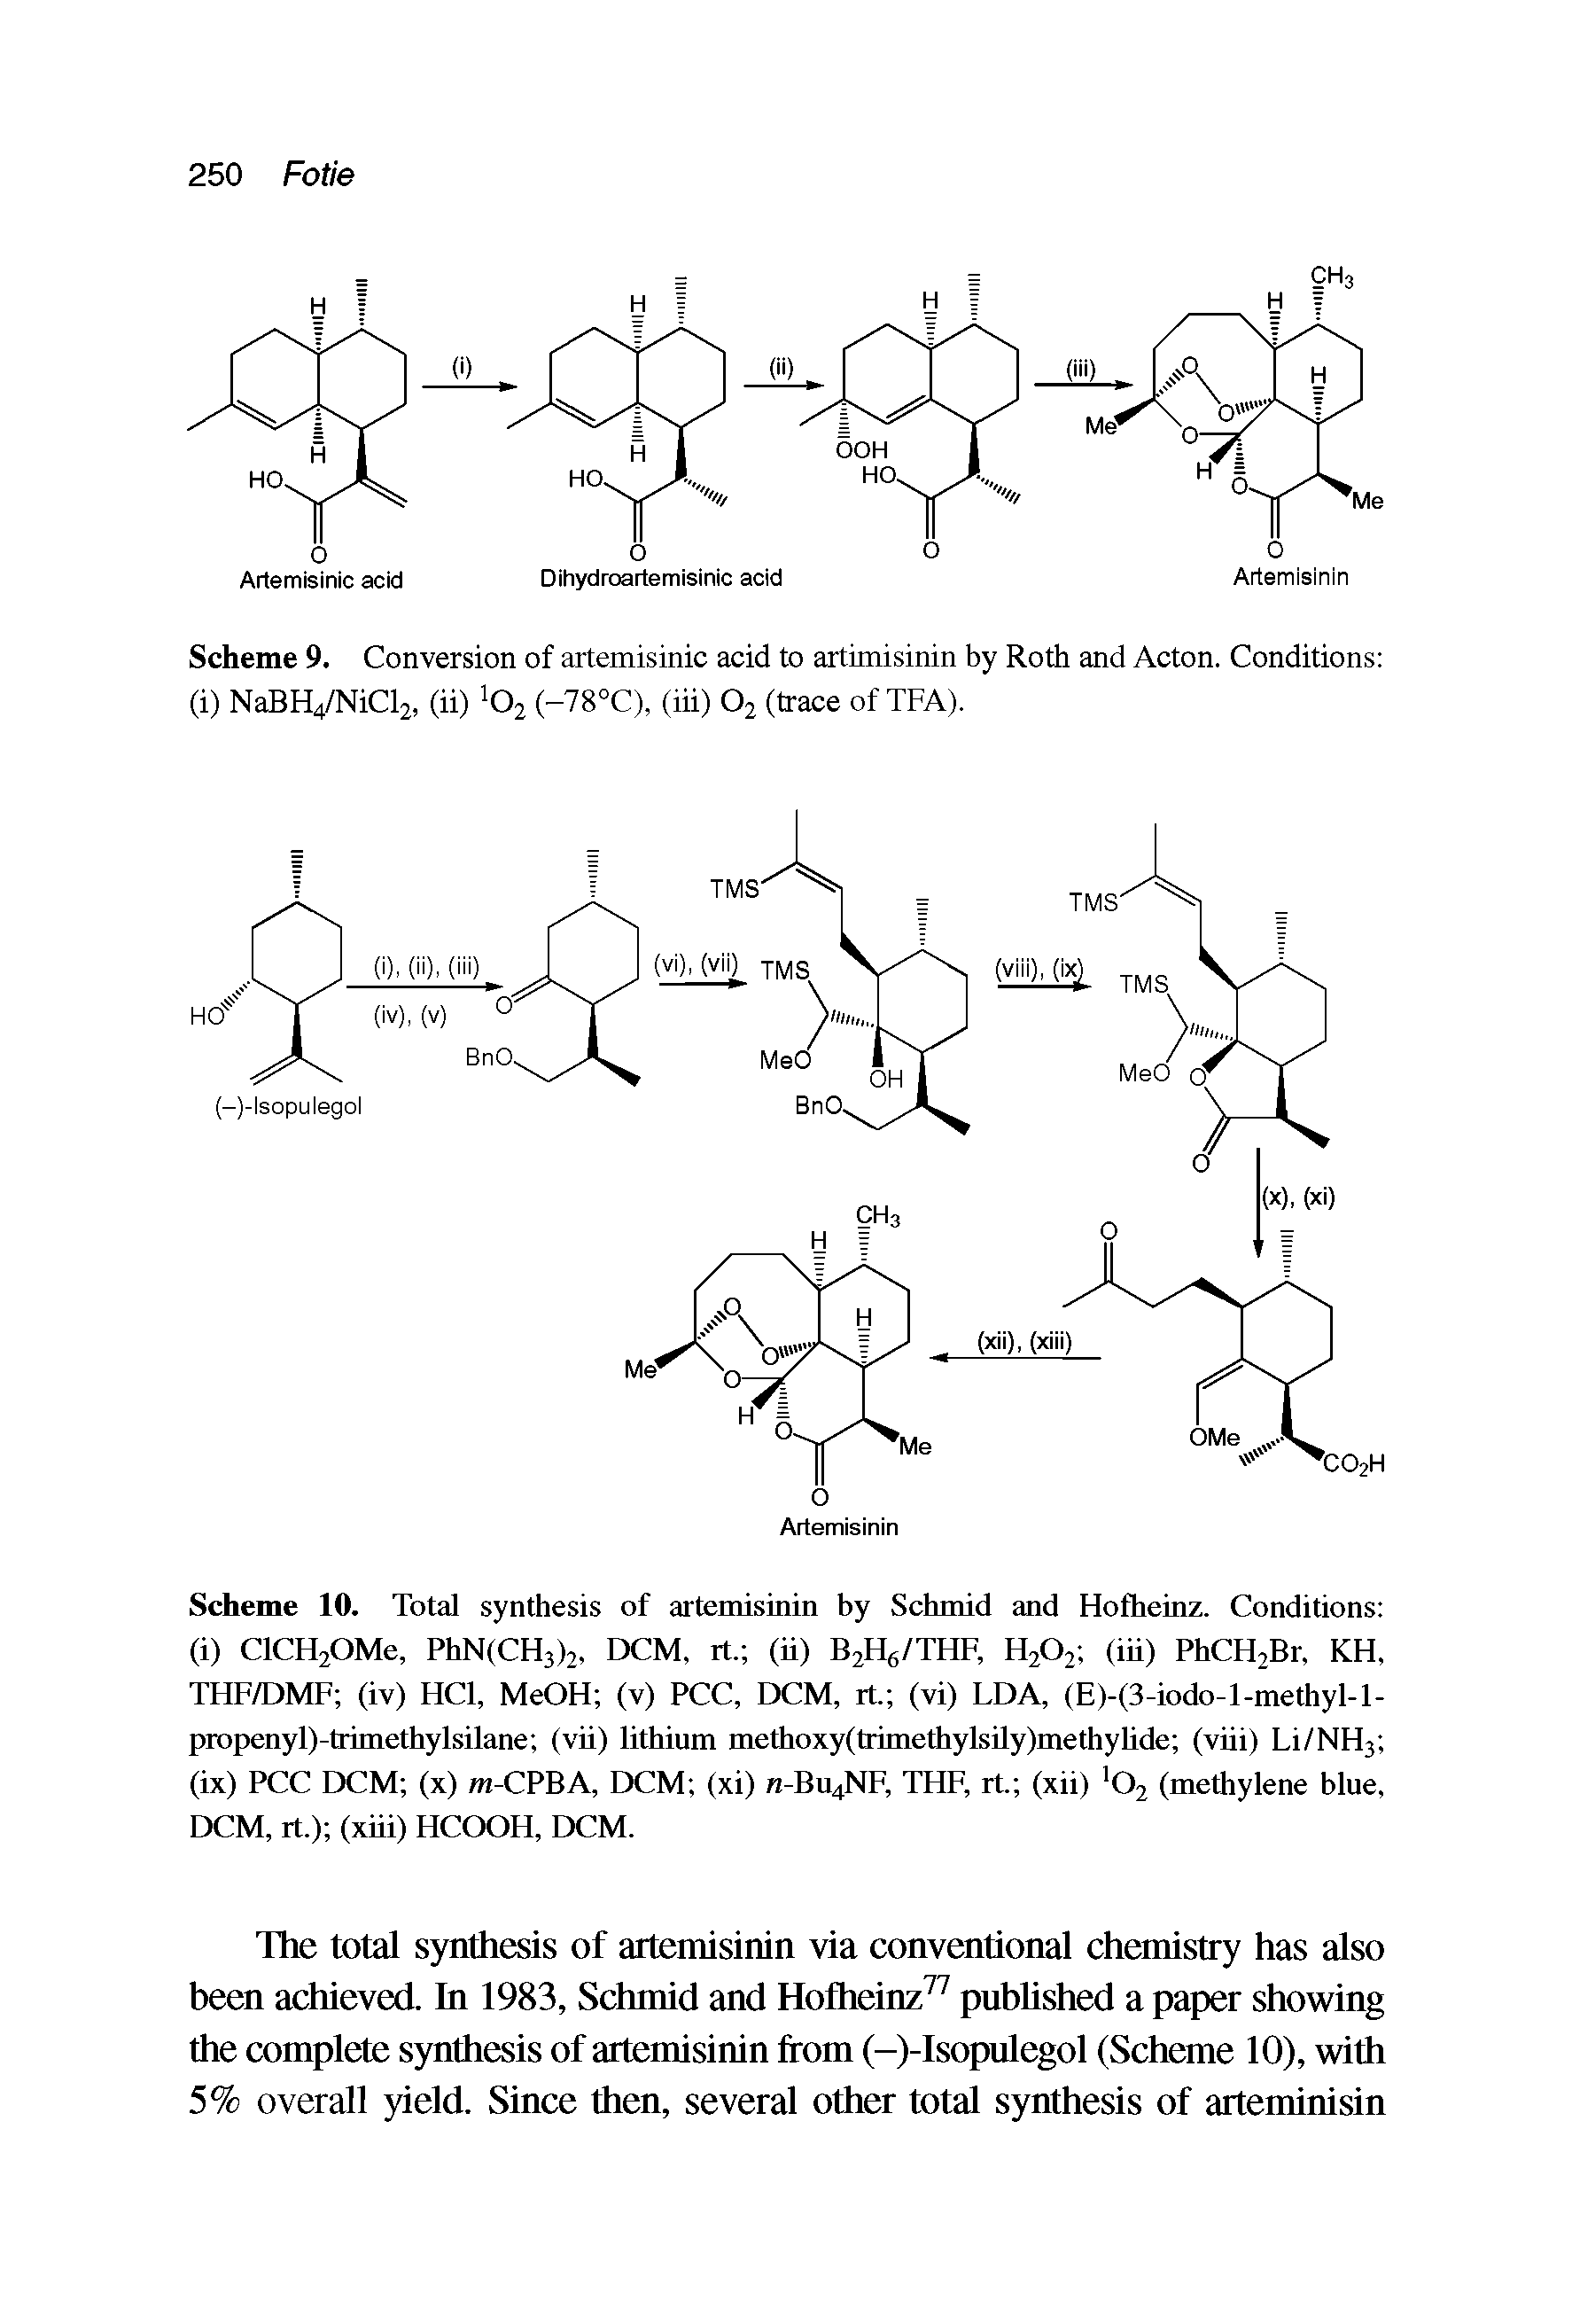 Scheme 10. Total synthesis of artemisinin by Schmid and Hofheinz. Conditions (i) ClCH20Me, PhN(CH3)2, DCM, rt. (ii) B2H6/THF, H2O2 (iii) PhCHzBr, KH, THF/DMF (iv) HCl, MeOH (v) PCC, DCM, rt. (vi) LDA, (E)-(3-iodo-l-methyl-l-propenyl)-trimethylsilane (vii) lithium methoxy(trimethylsily)methyhde (viii) Li/NH3 (ix) PCC DCM (x) m-CPBA, DCM (xi) -Bu4NF, THF, rt. (xii) O2 (methylene blue, DCM, rt.) (xiii) HCOOH, DCM.